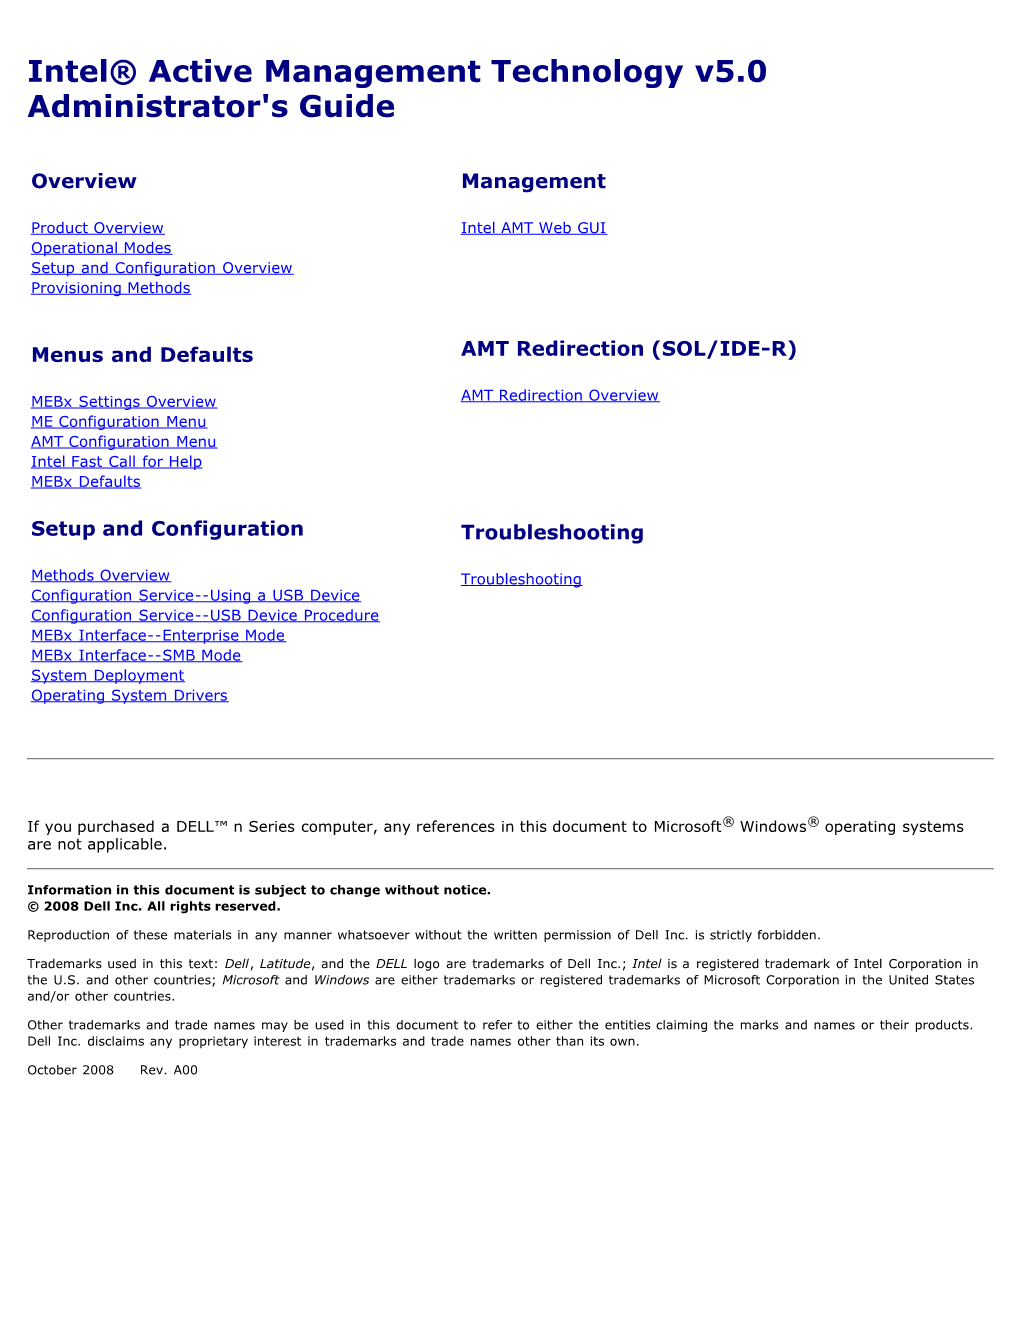 Intel® AMT V5.0 Administrator's Guide